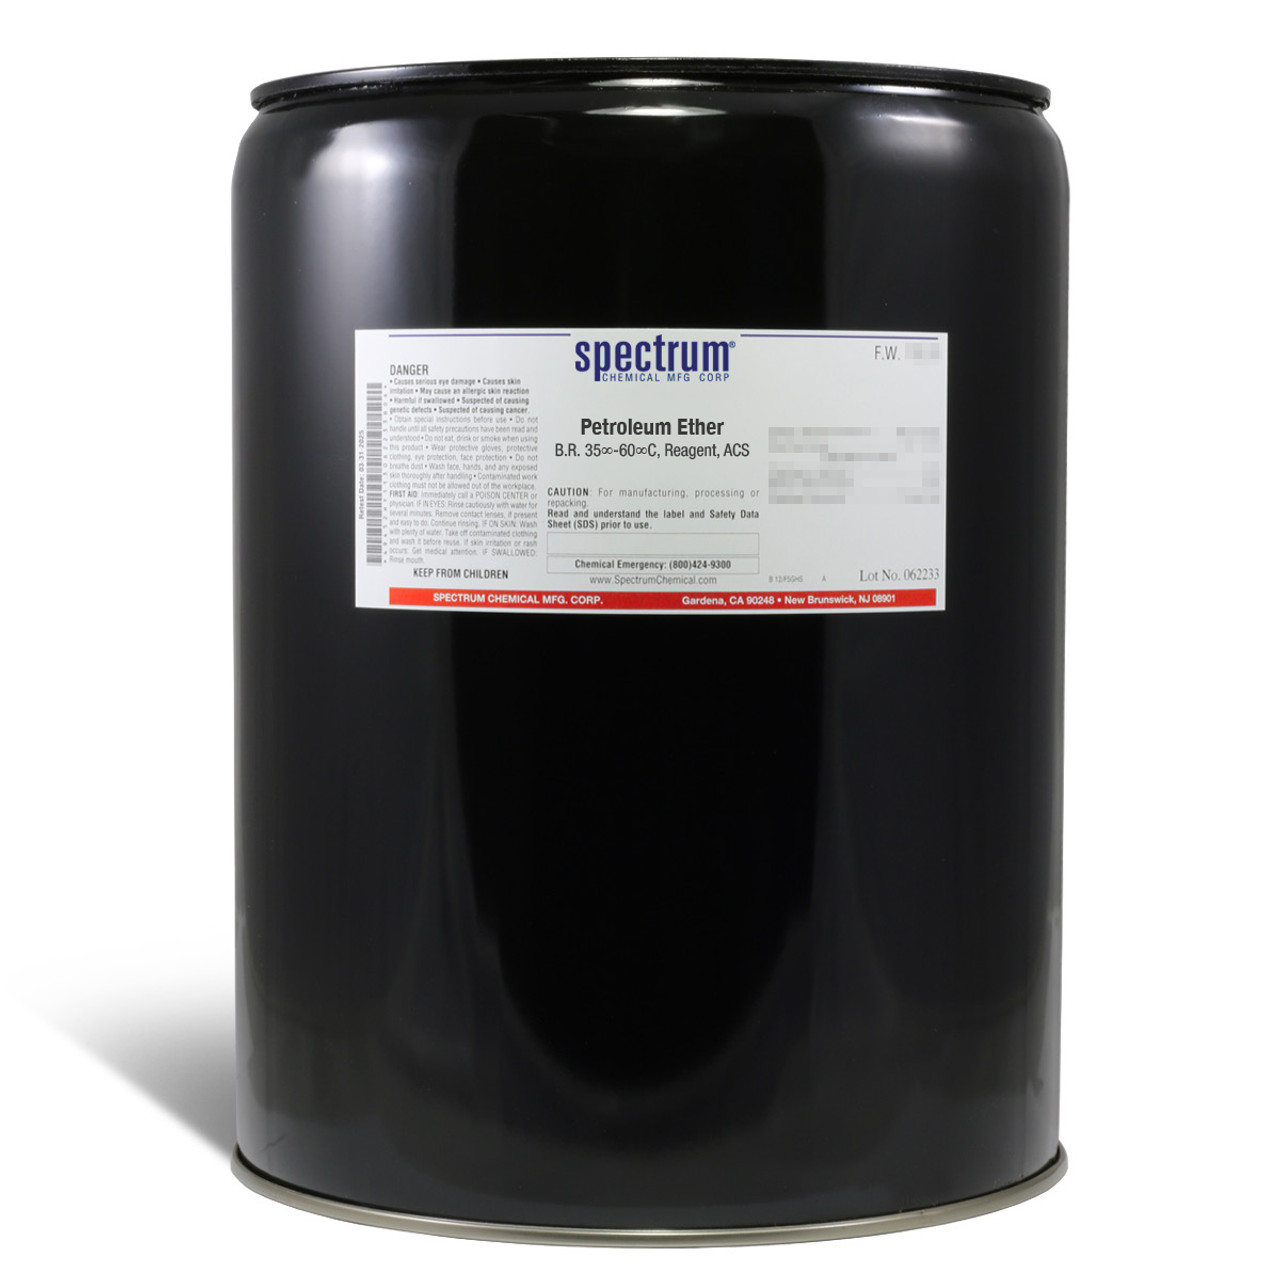 Petroleum Ether, B.R. 35 DEG -60 DEG C Reagent, ACS, 20L, Each